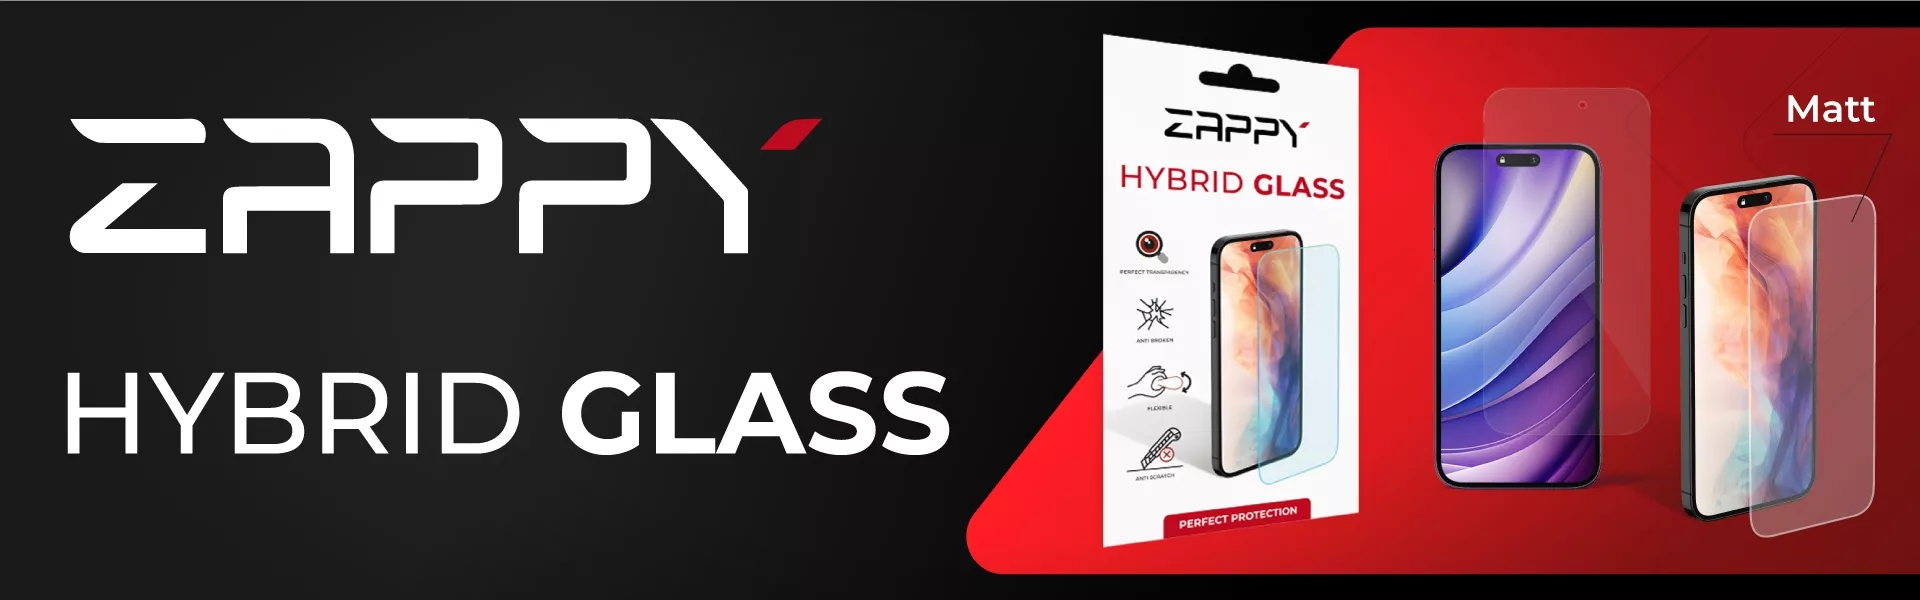 Zappy hybrid glass